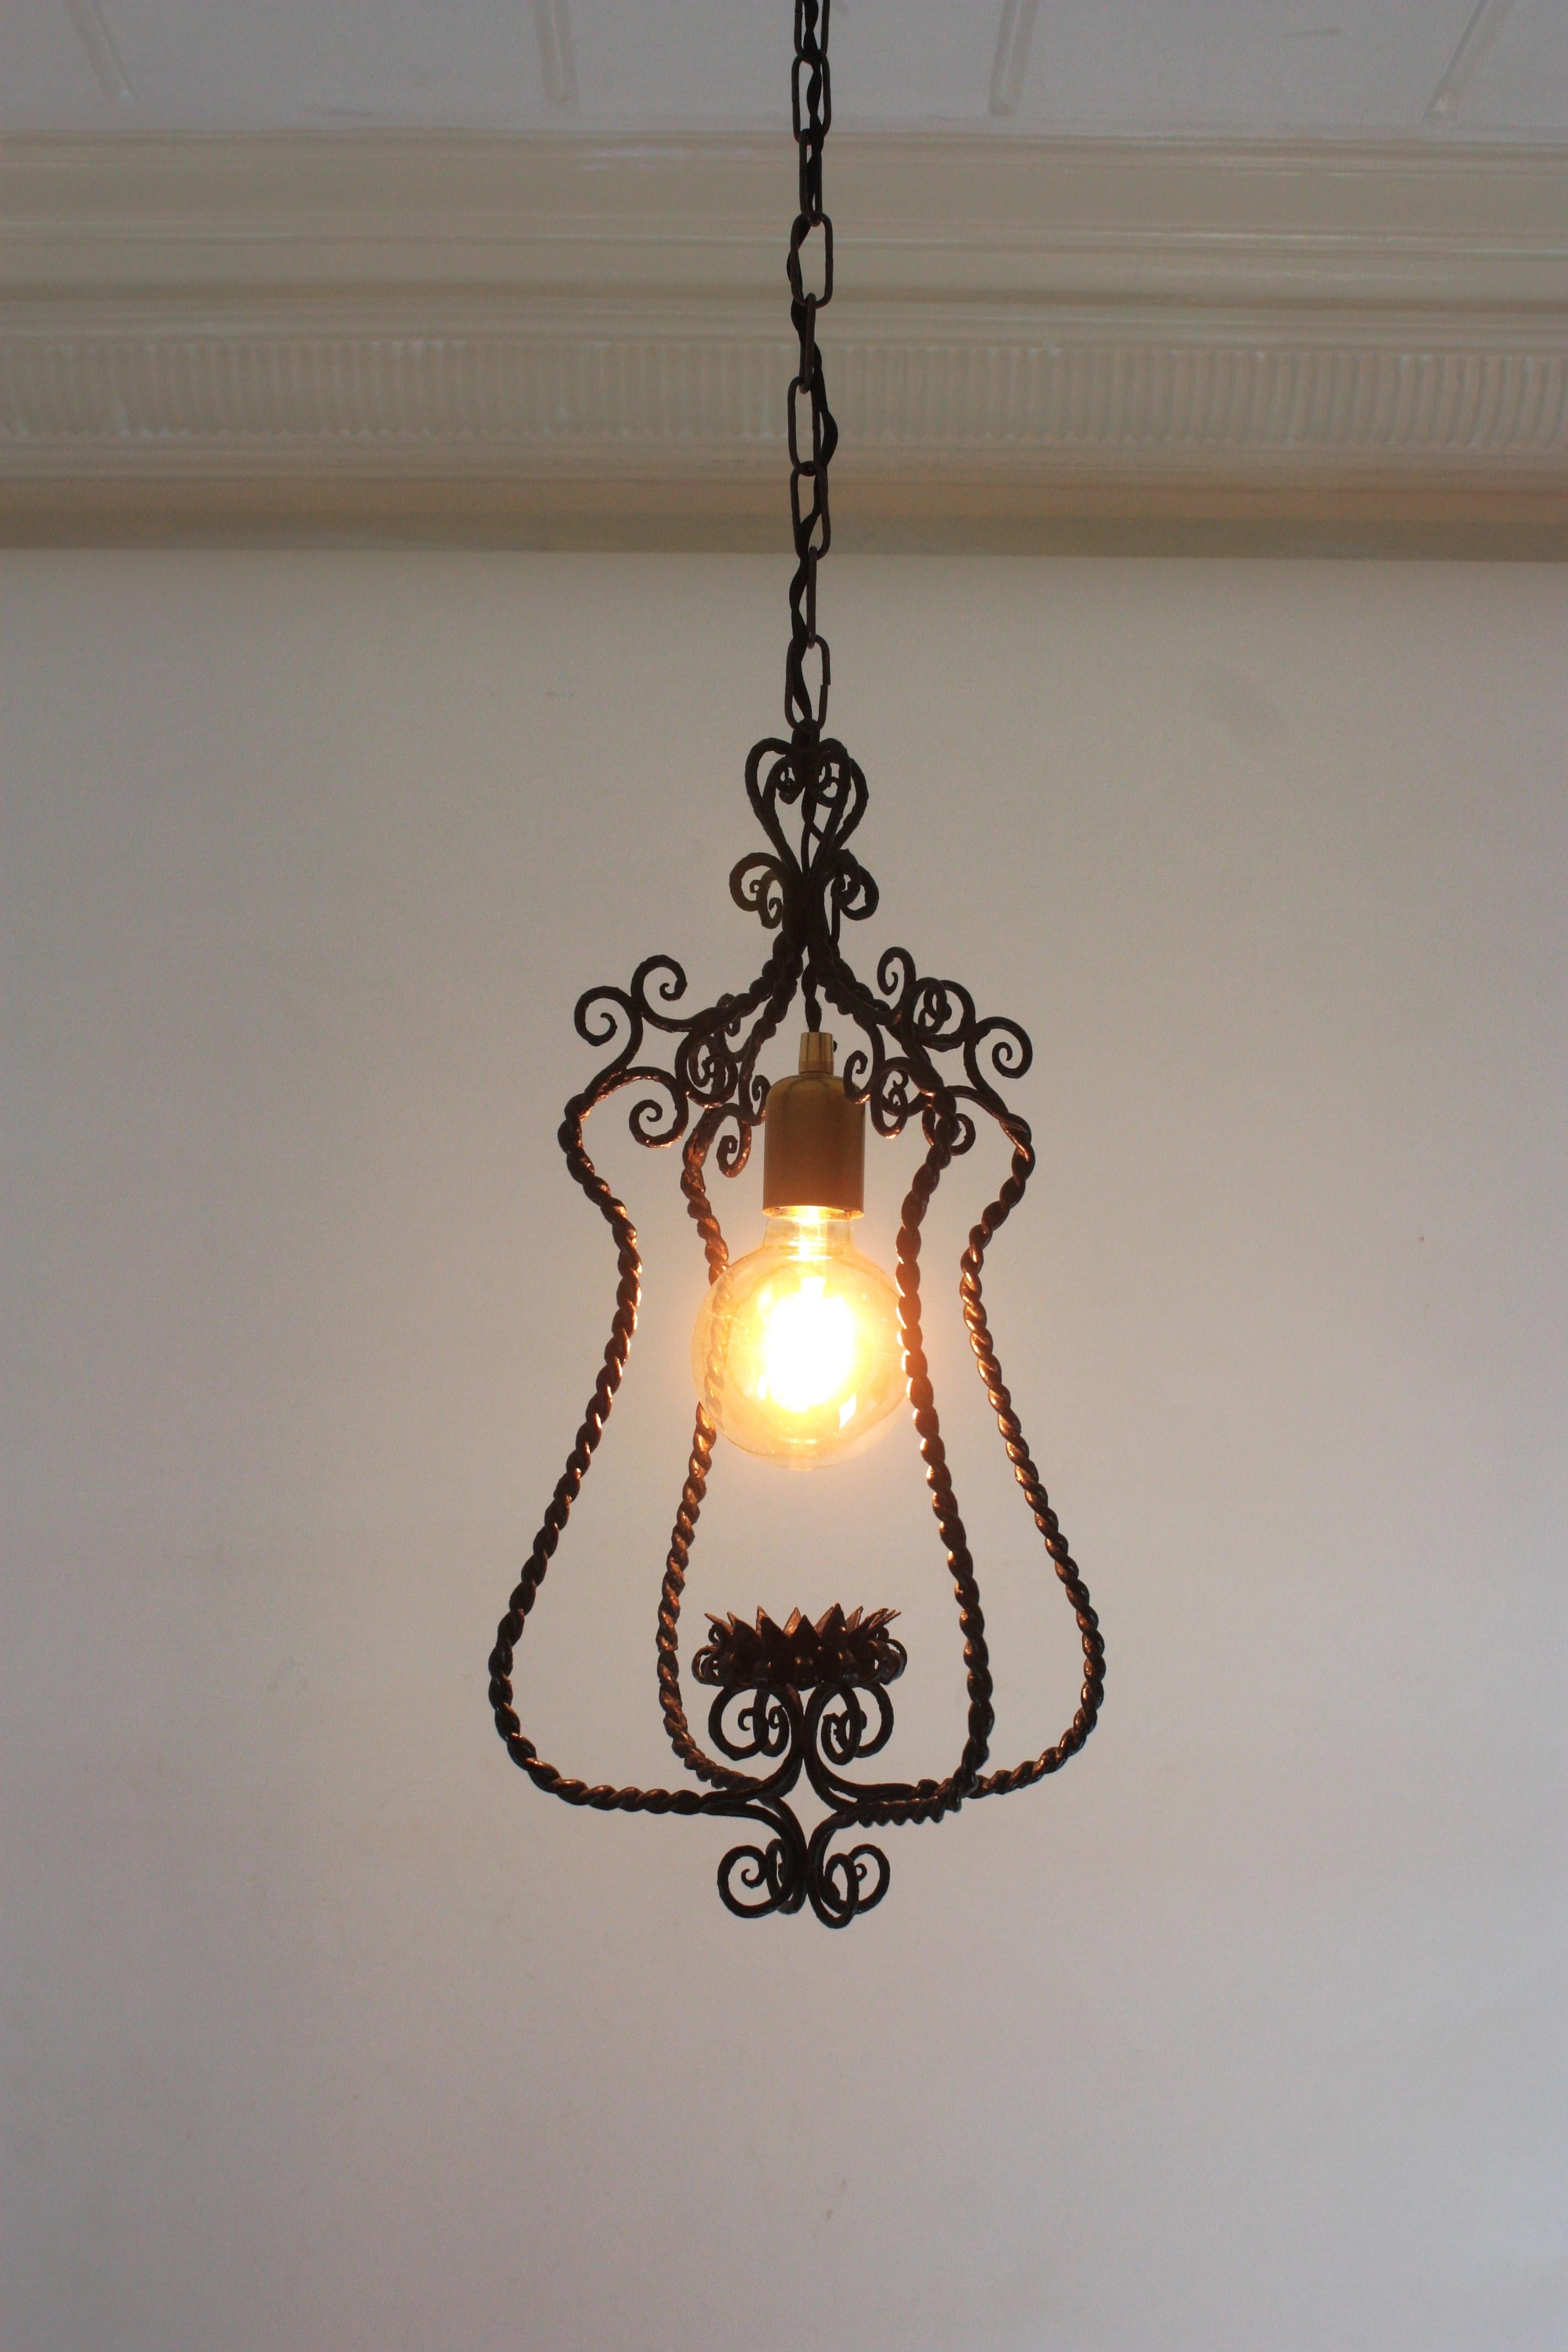 Spanish Lantern Pendant Lamp in Wrought Iron, Scroll Twisting Design, 1940s For Sale 1